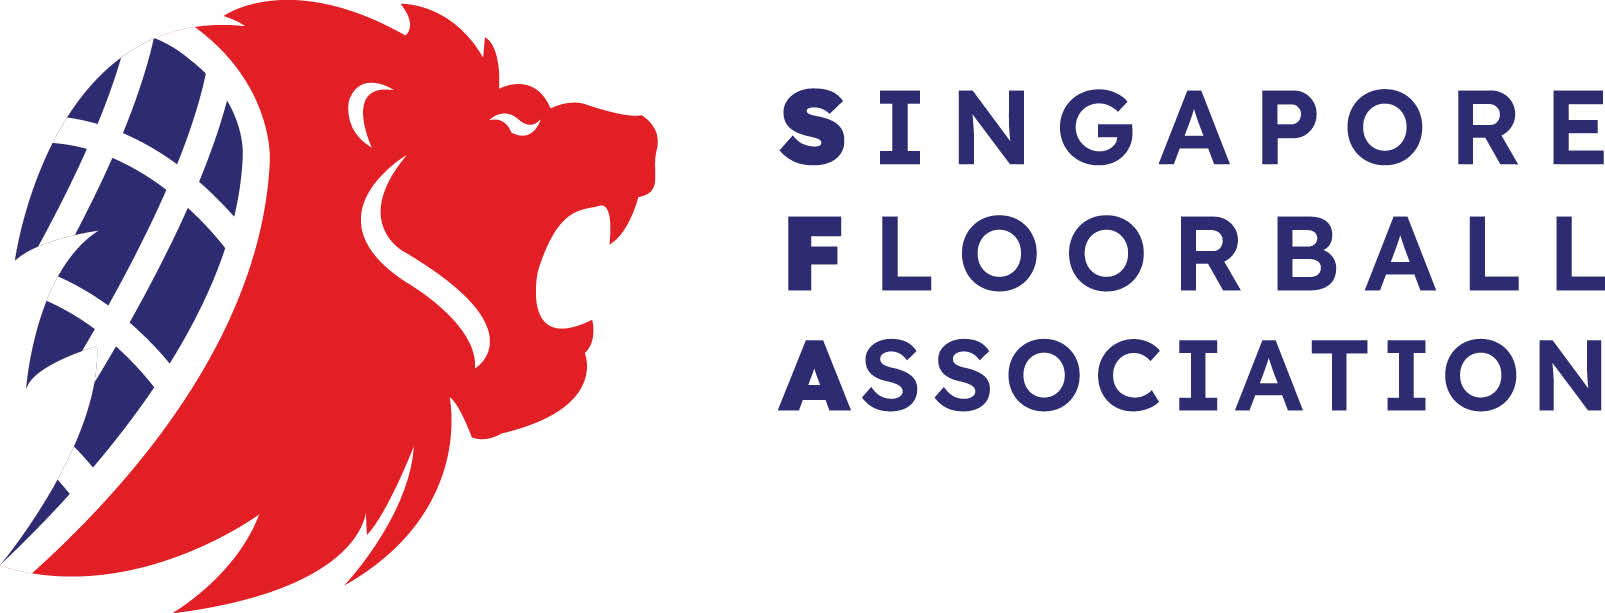 Singapore Floorball Association logo